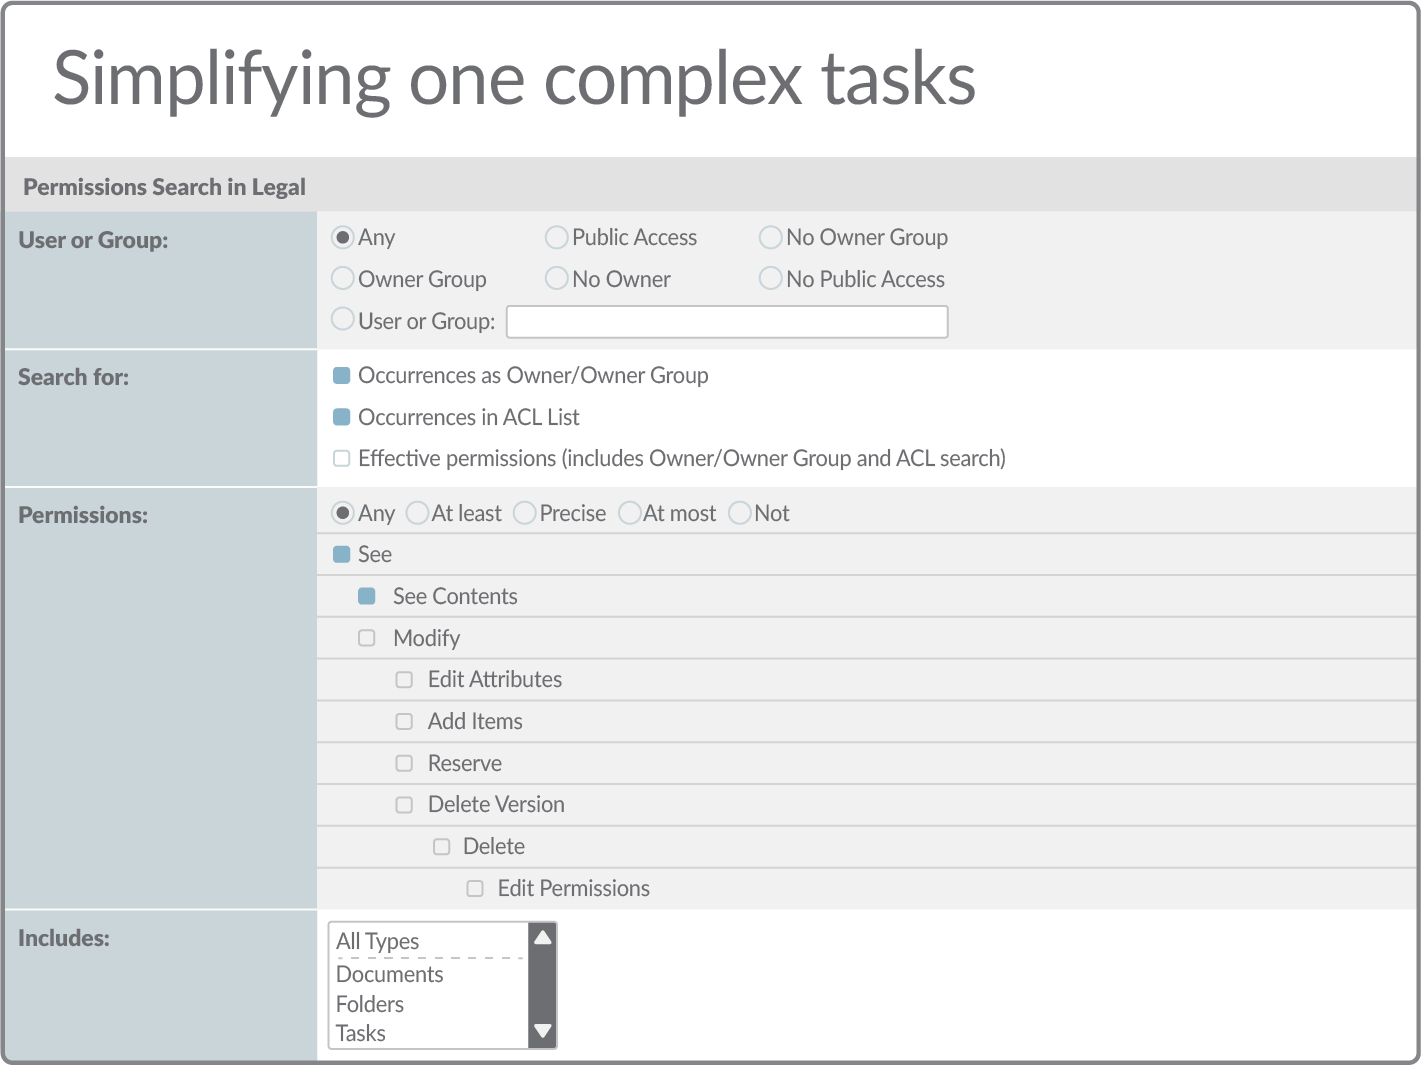 Simplifying complex tasks